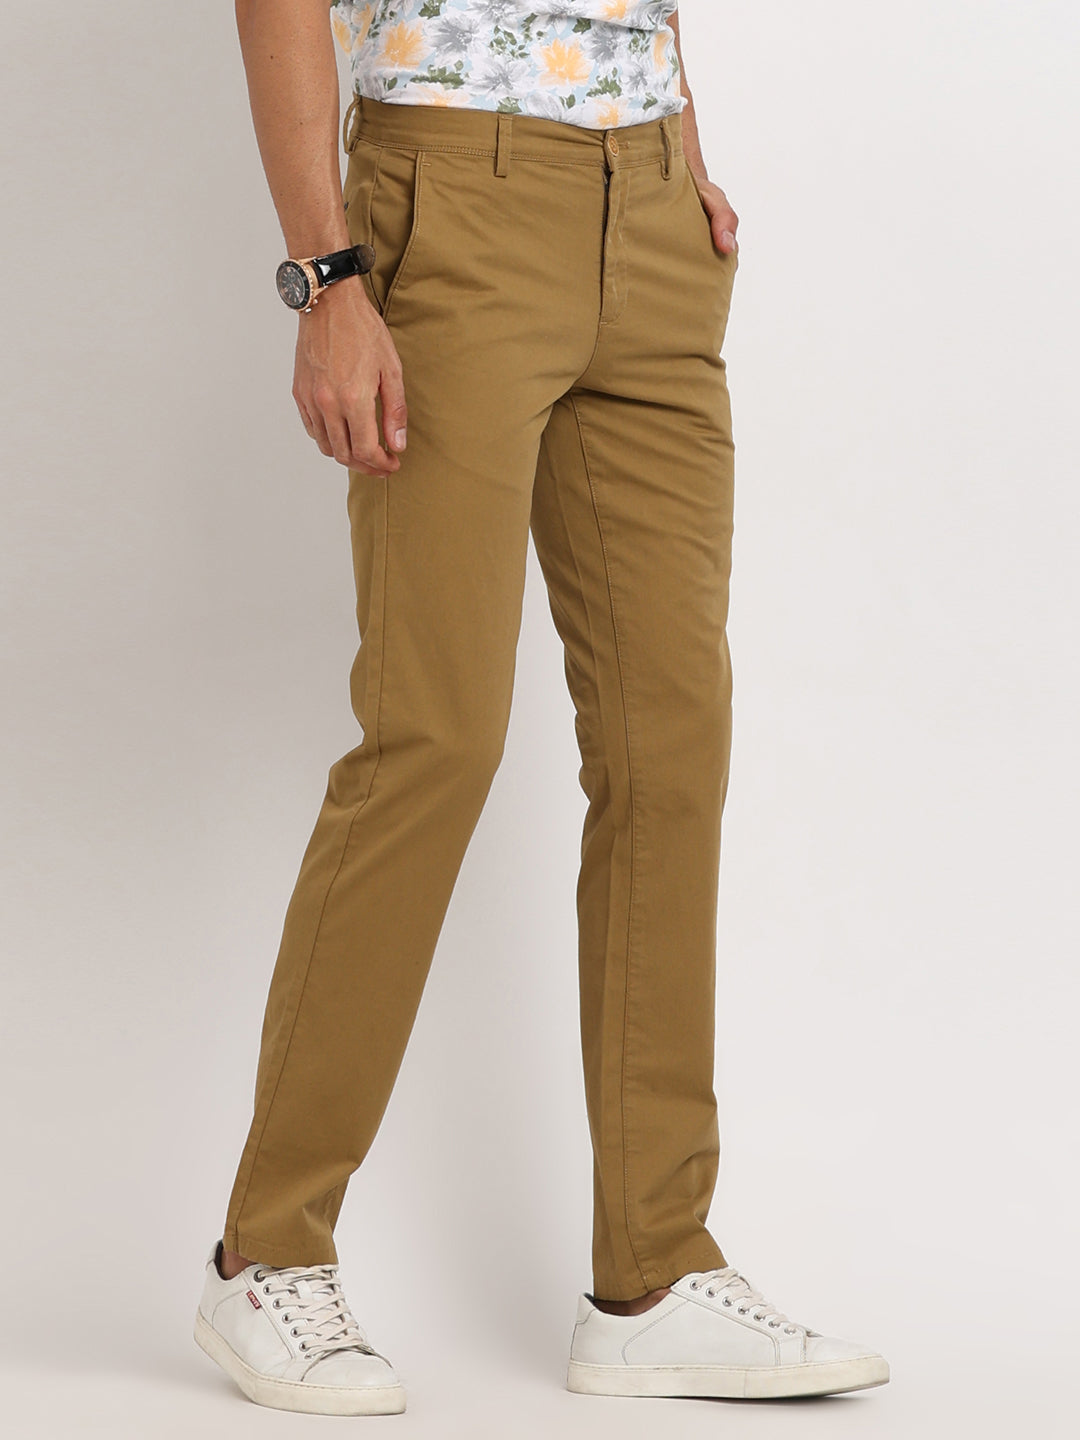 Cotton Stretch Khaki Plain Ultra Slim Fit Flat Front Casual Trouser